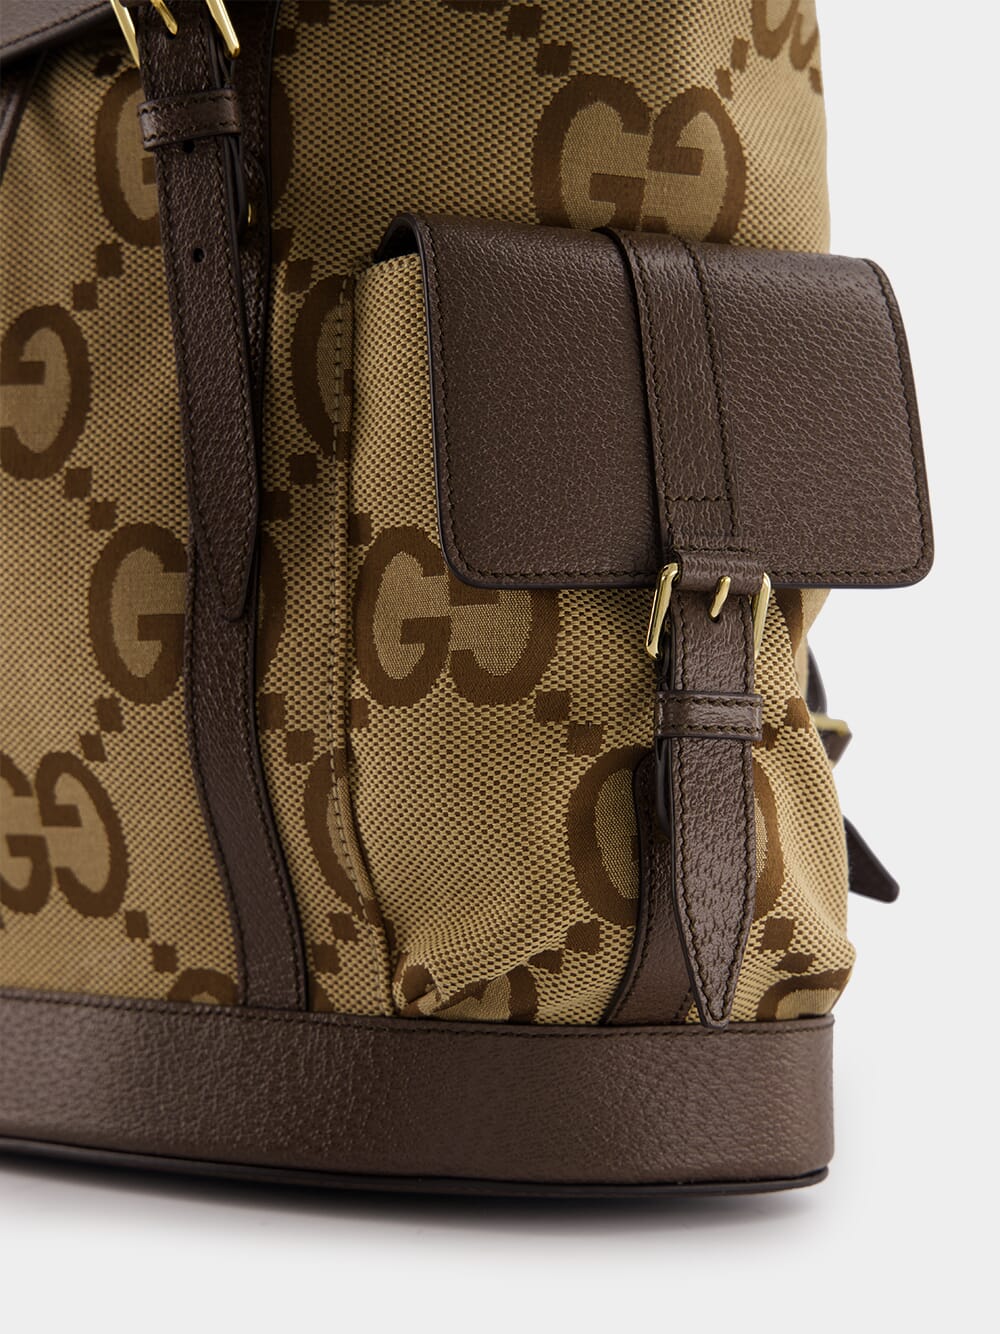 GucciJumbo GG backpack at Fashion Clinic